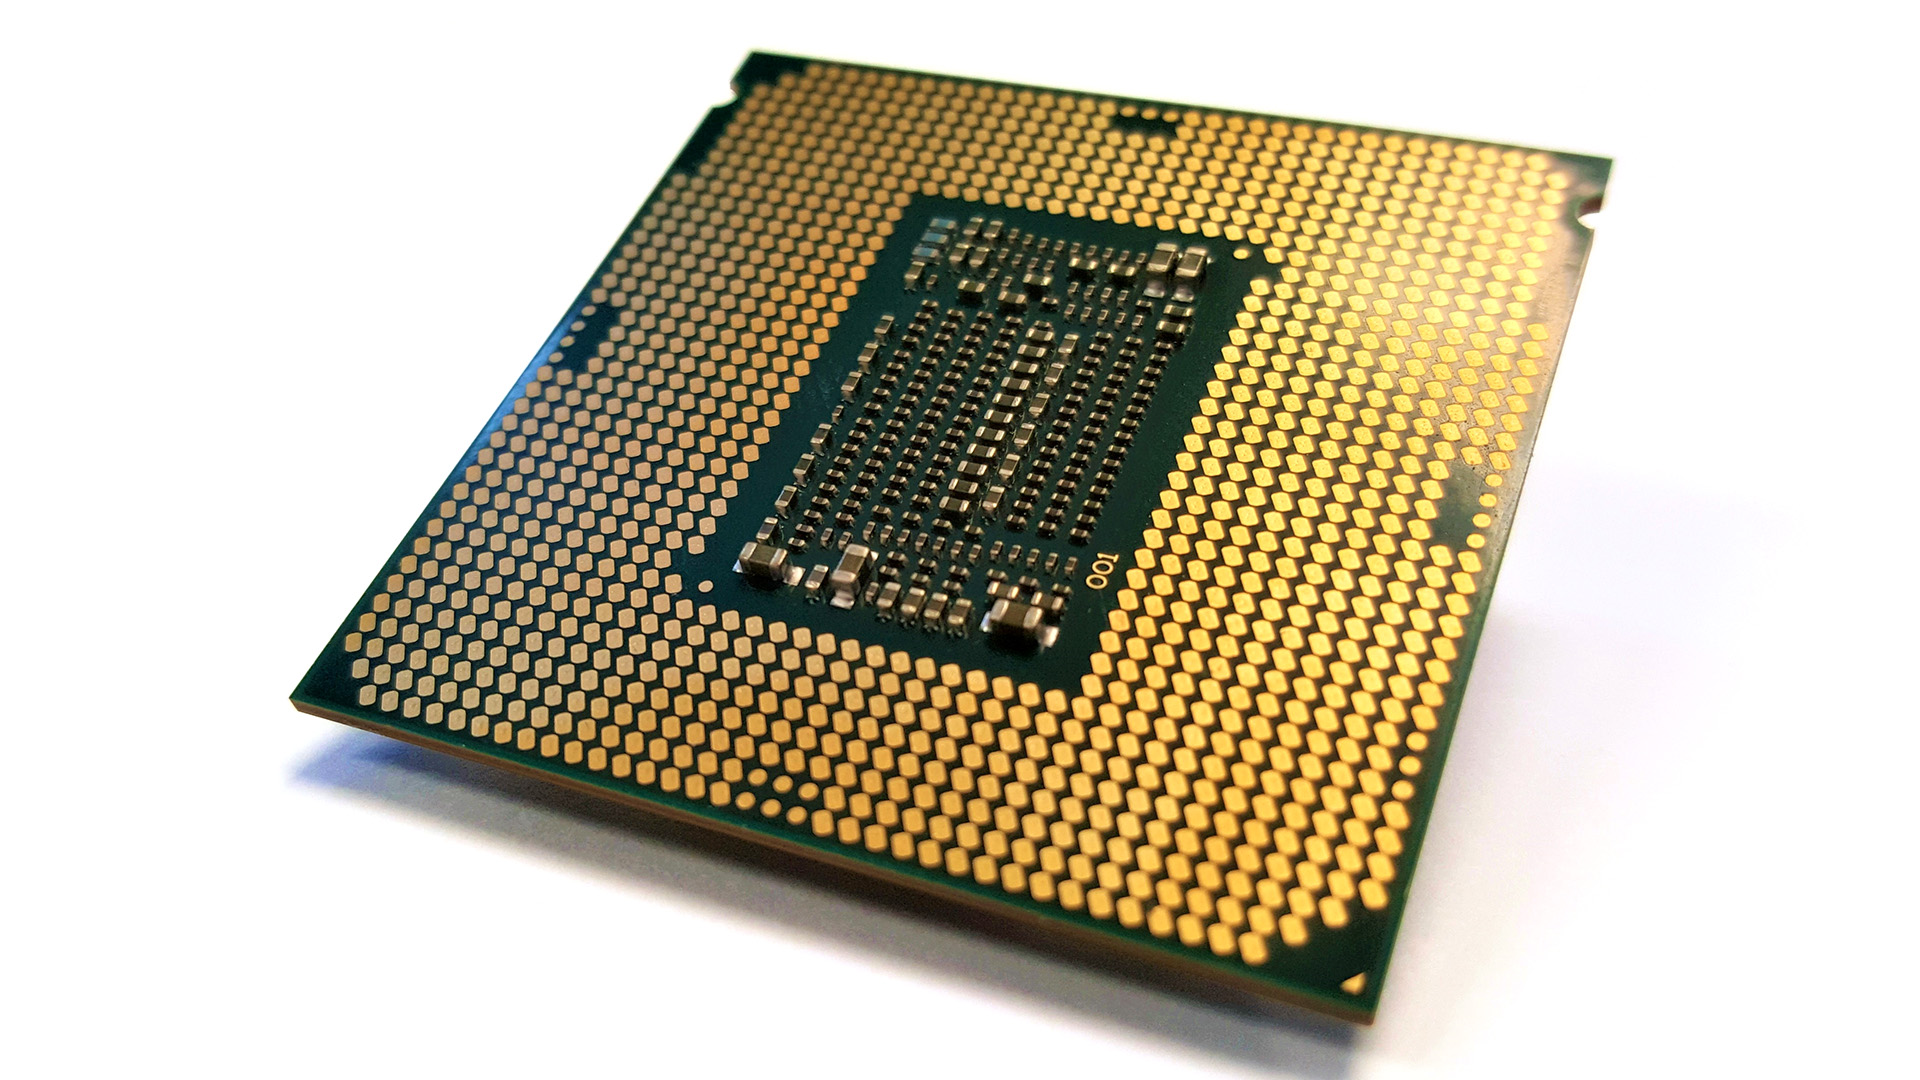 Intel's special edition Core i9 9900KS has lower IPC than the 9900K |  PCGamesN